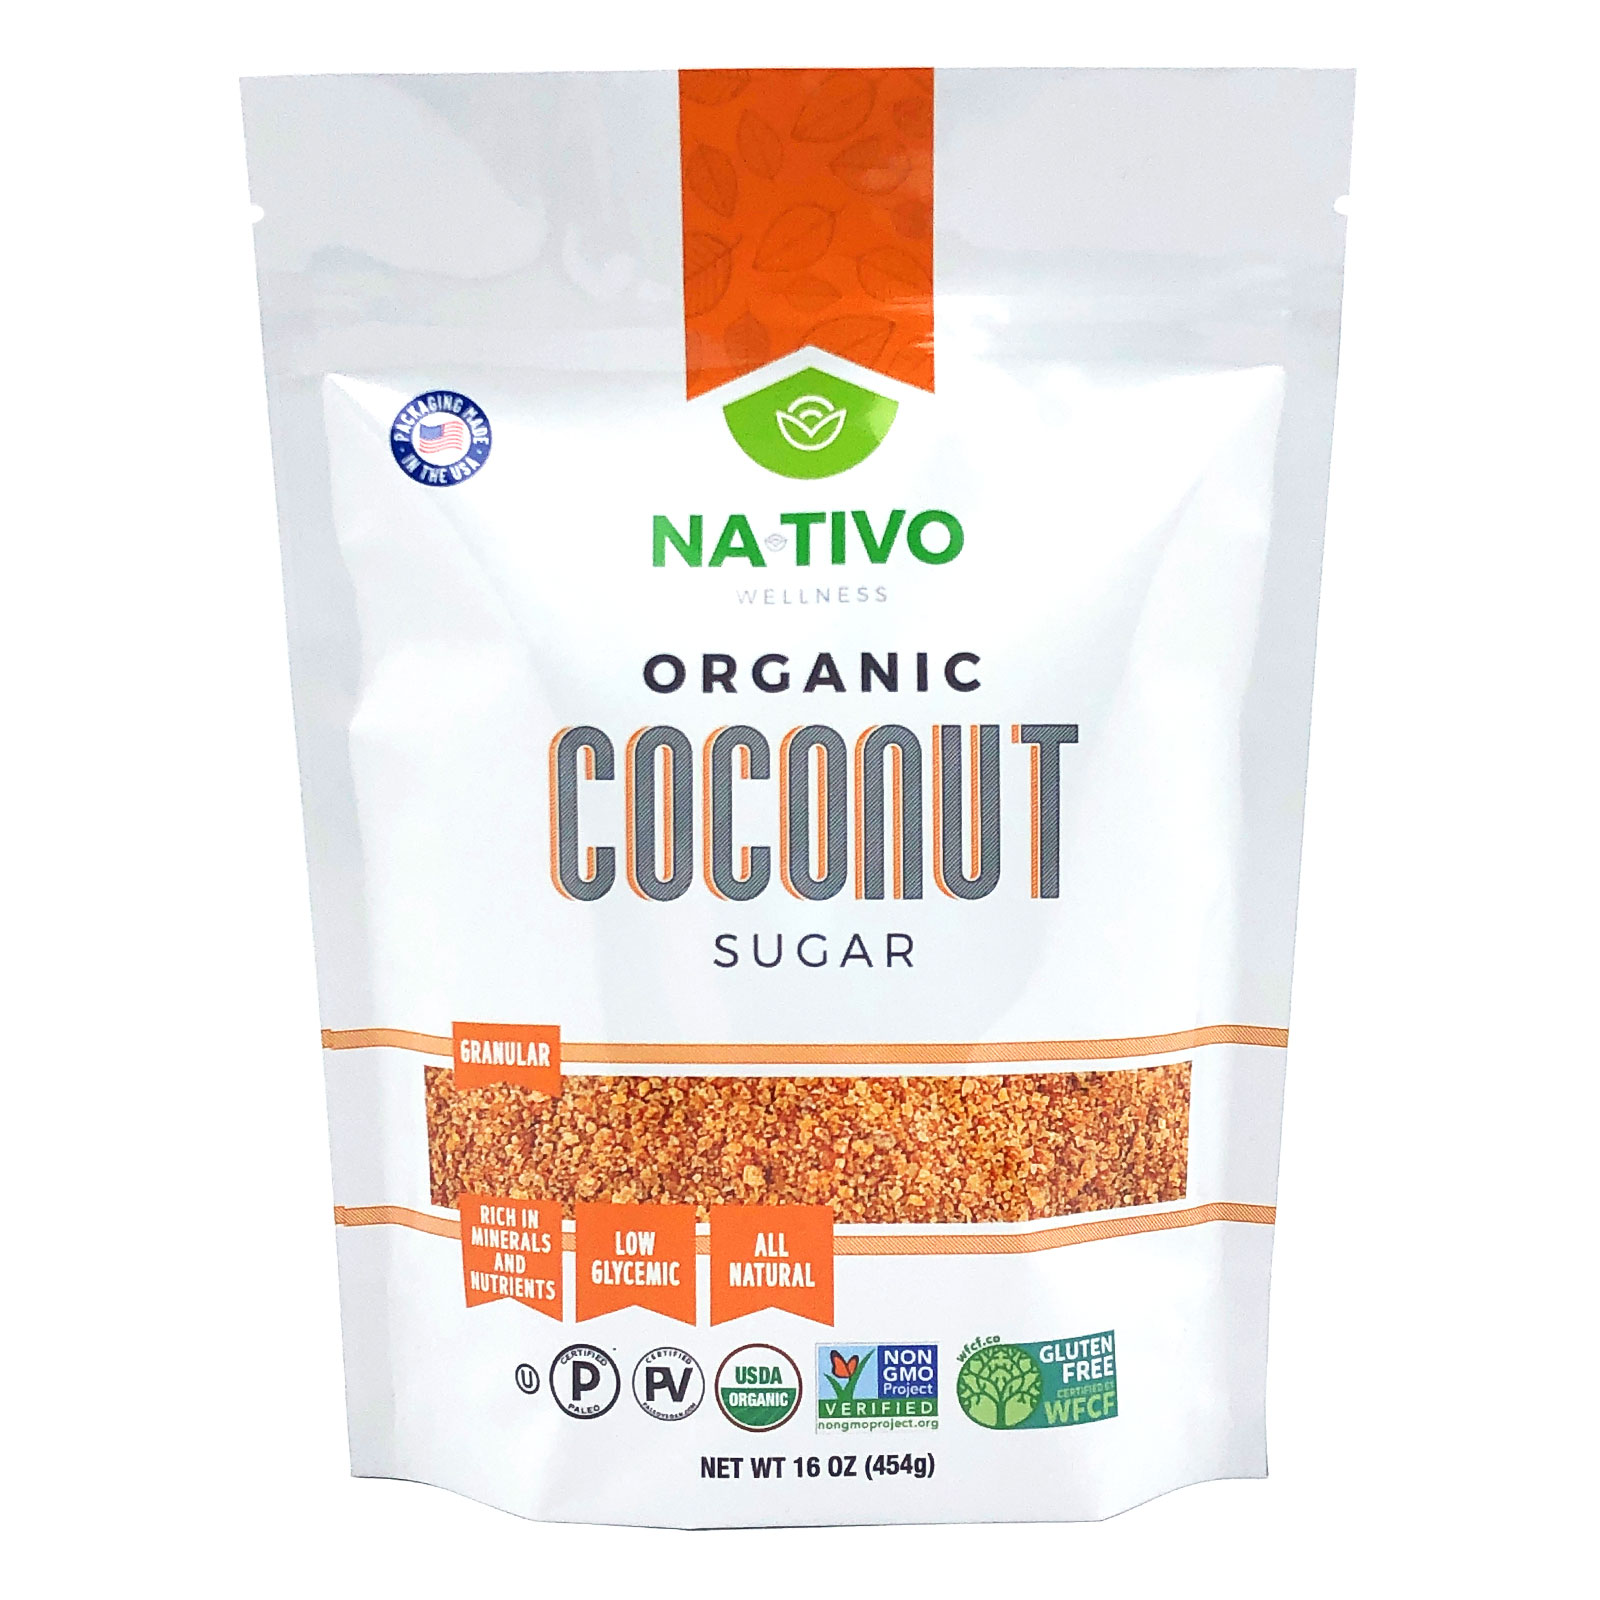 NaTivo Organic Coconut Sugar 12 units per case 1.0 lb